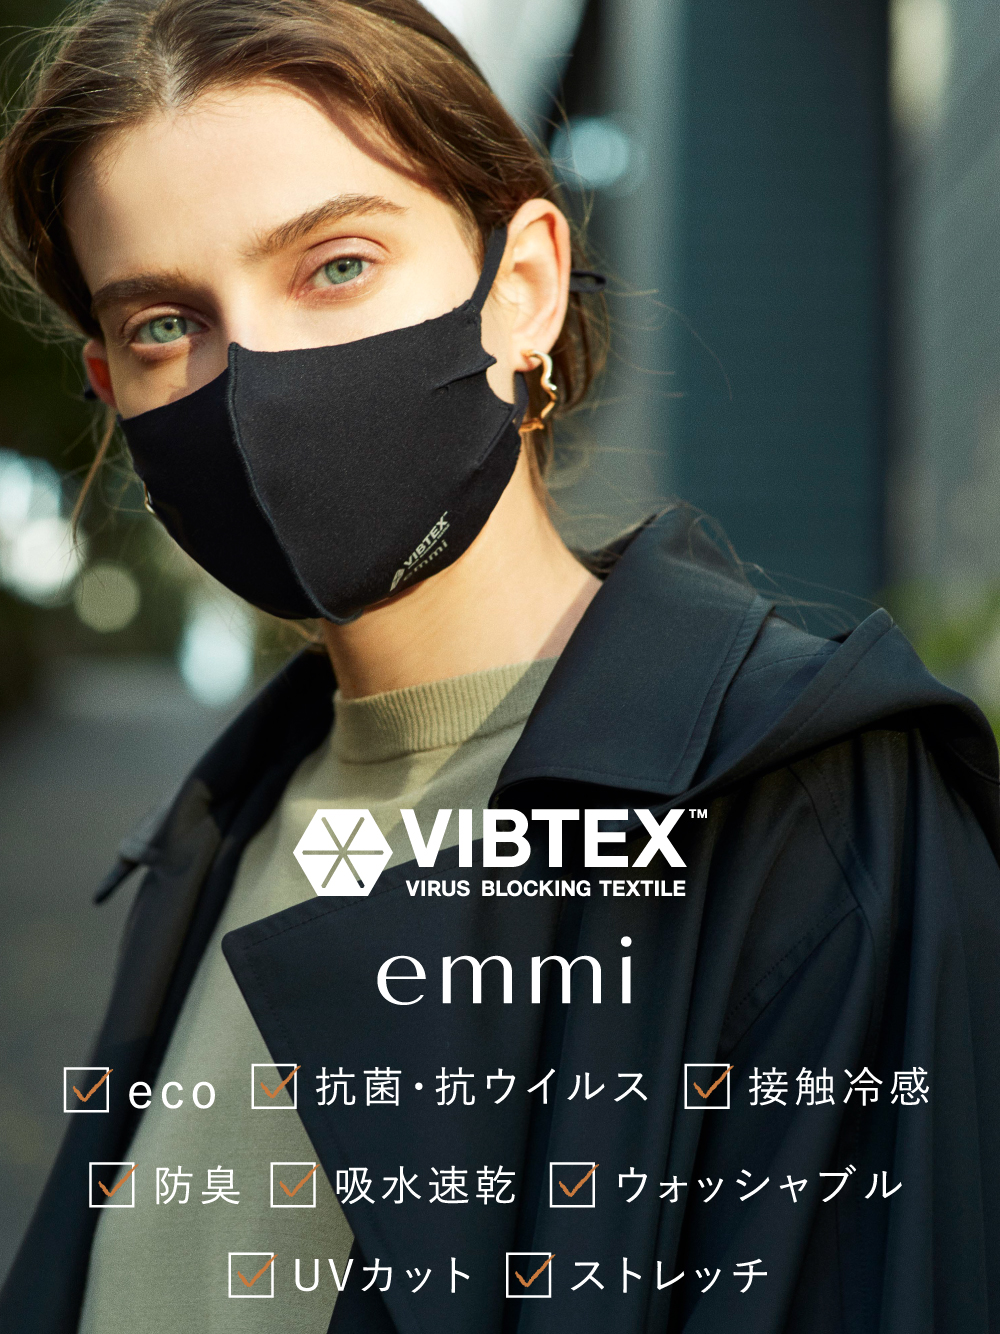 【emmi yoga】VIBTEX ポーチSet アジャスター付きマスク(BLK-F)